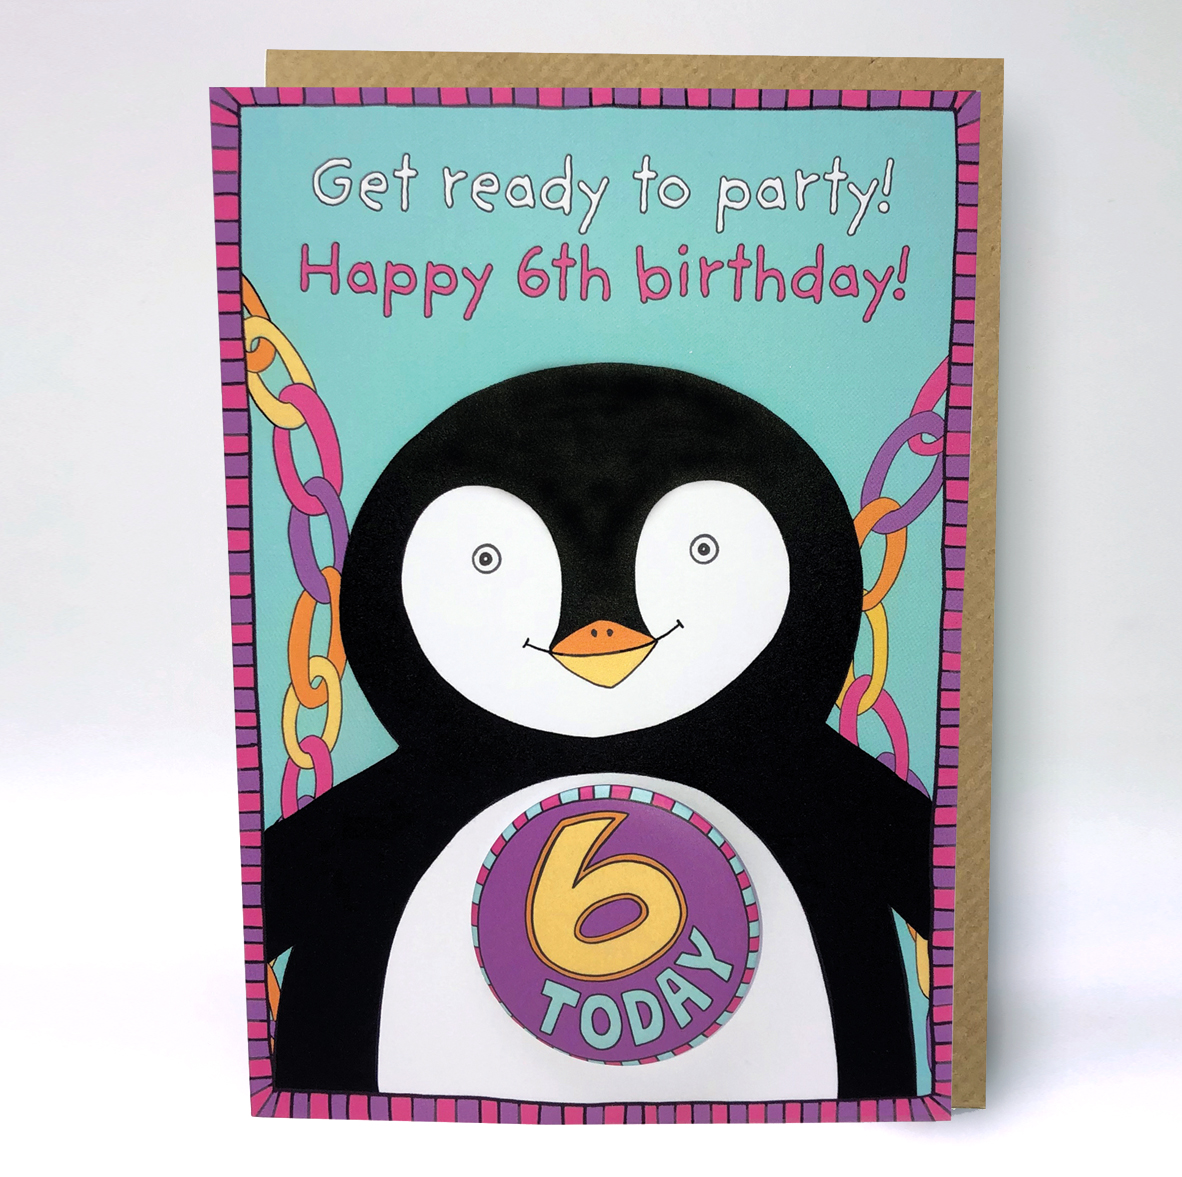 Happy 6th Birthday Penguin Badge Card